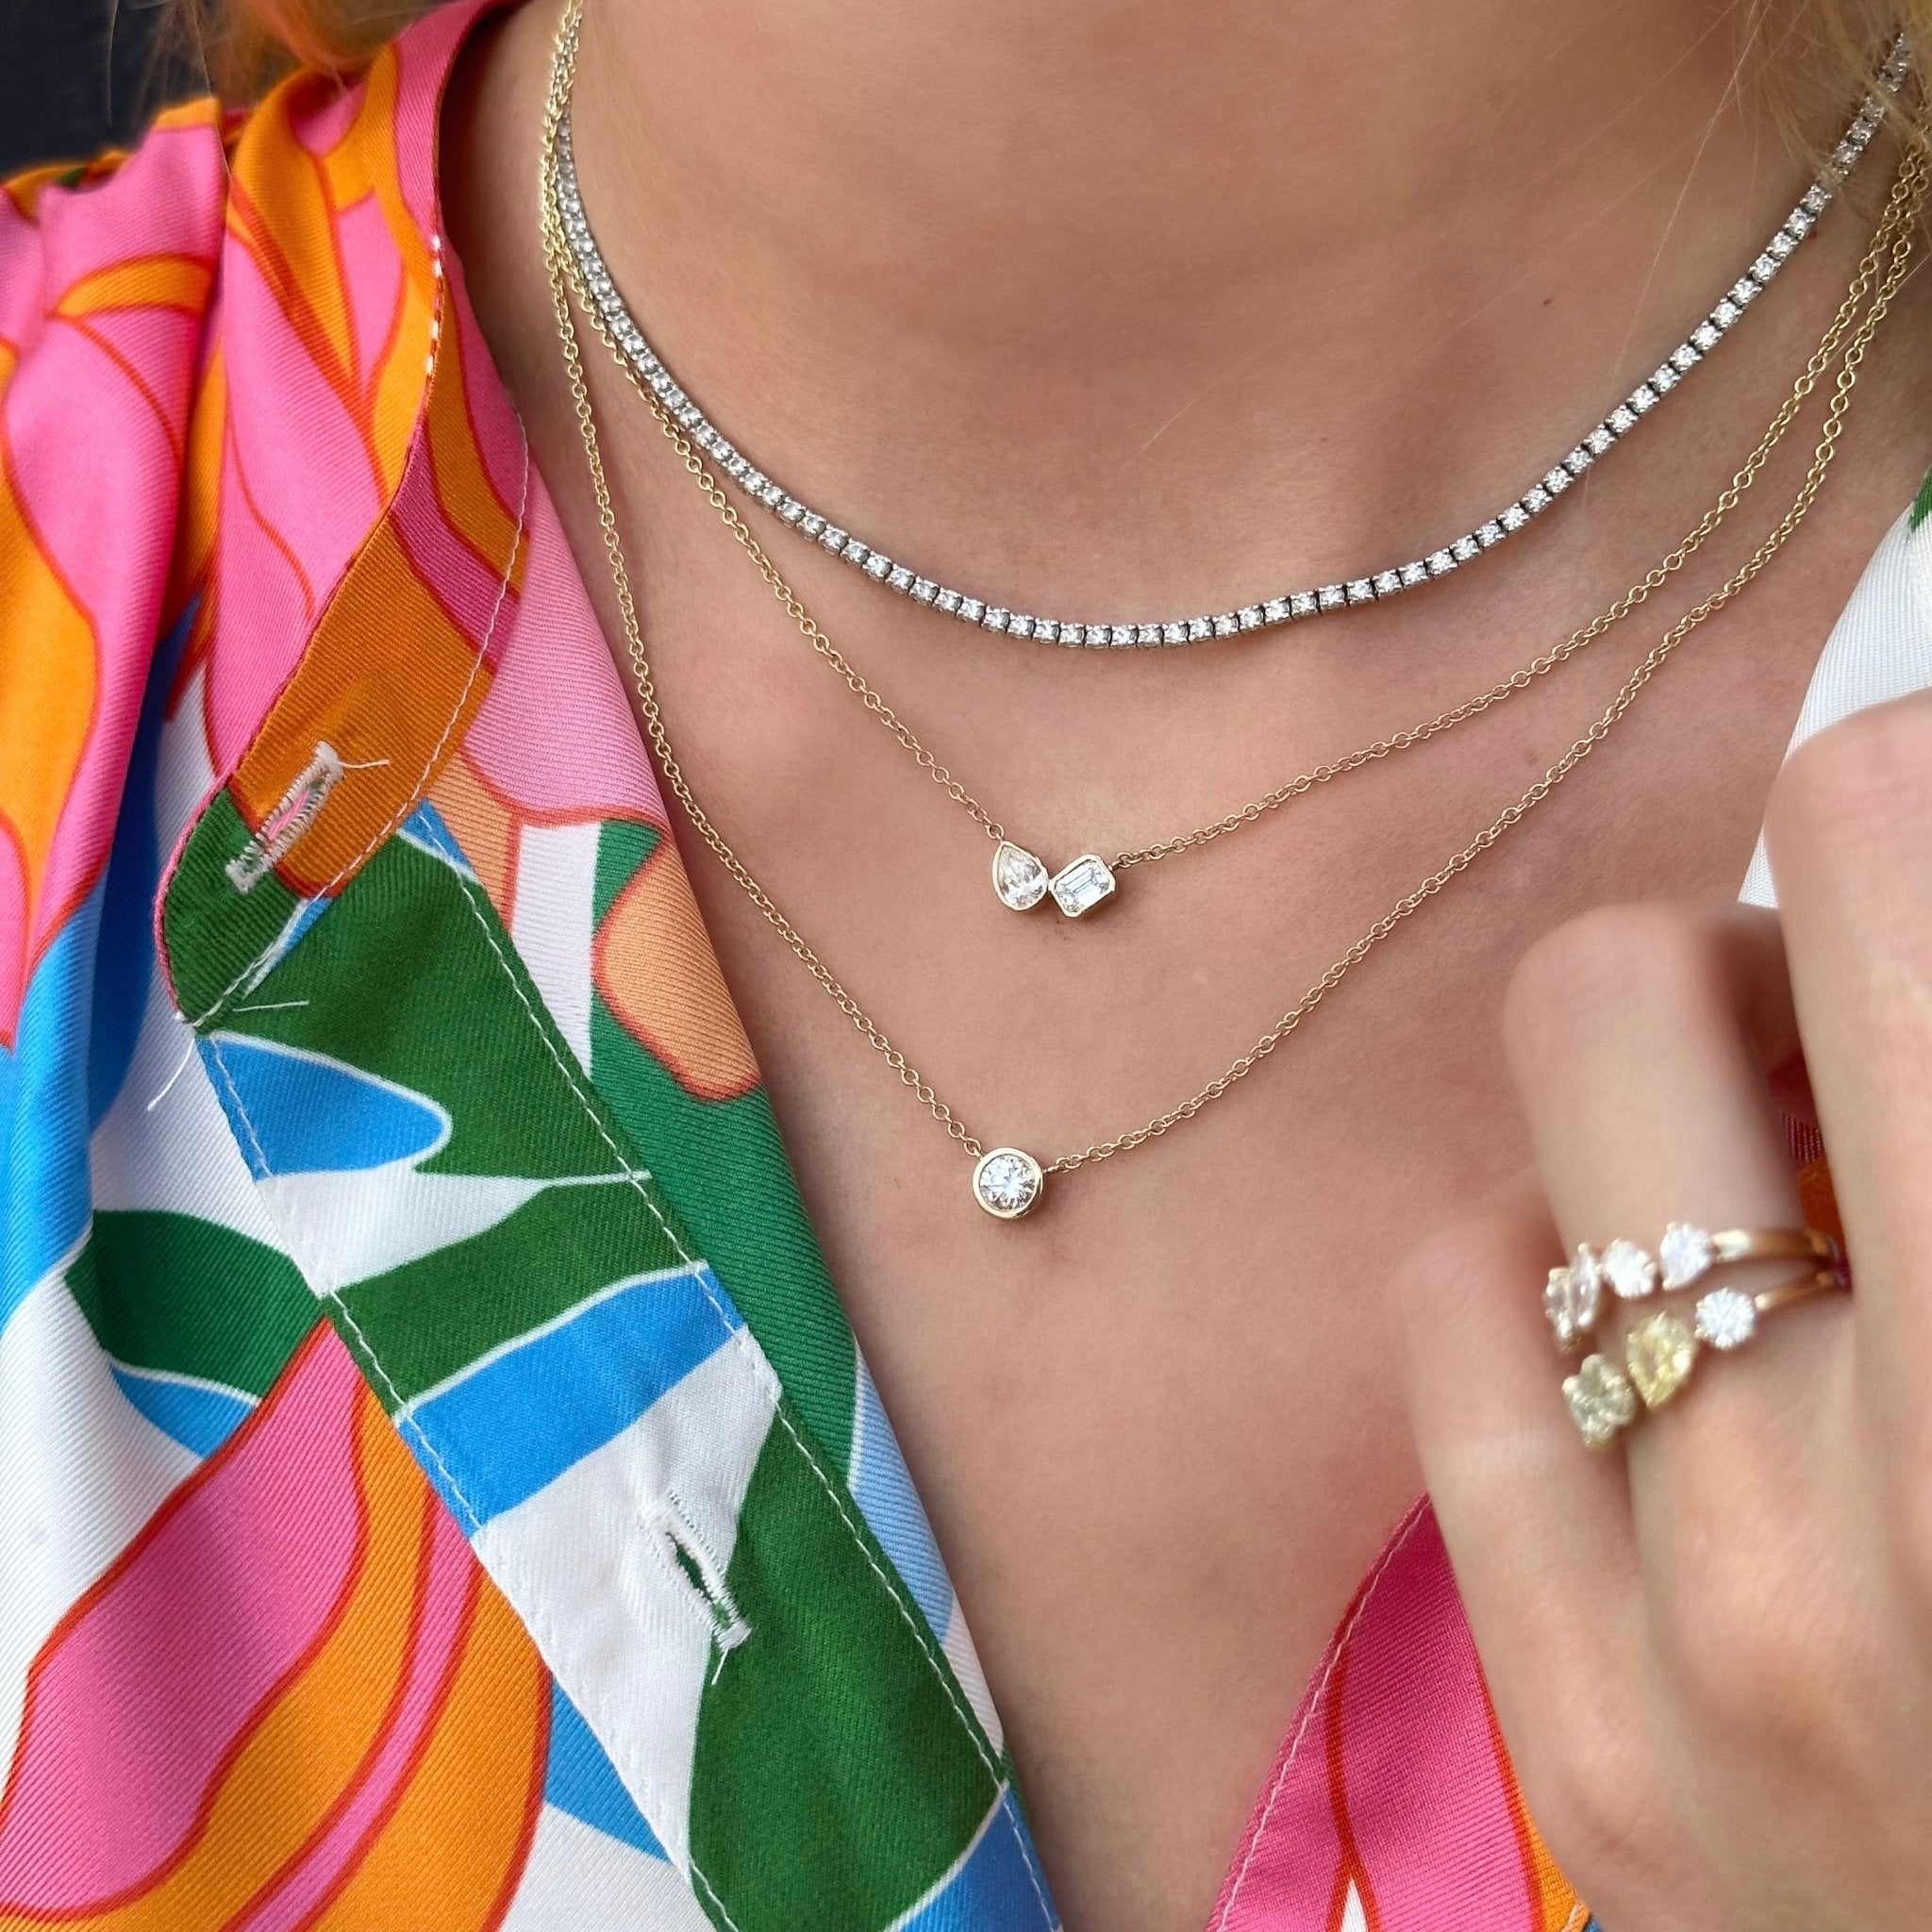 Bezel Set Pear Diamond Necklace – Harold Stevens